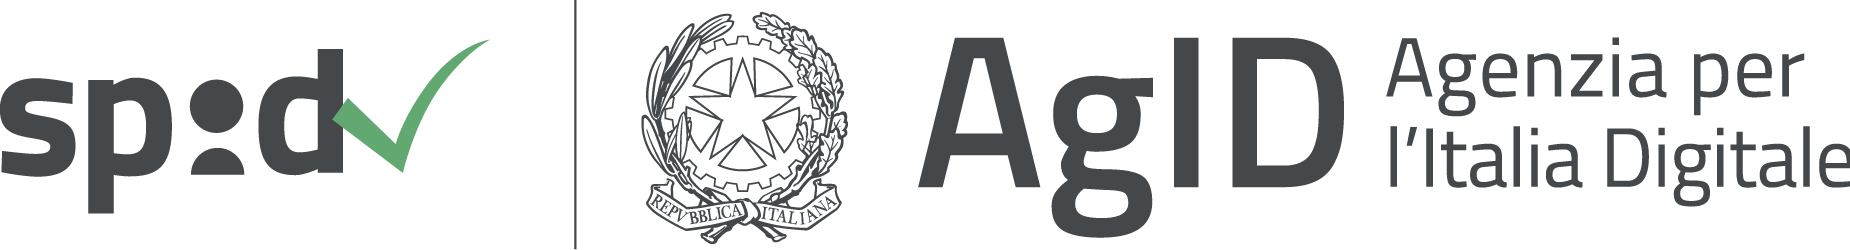 agid-spid-logo